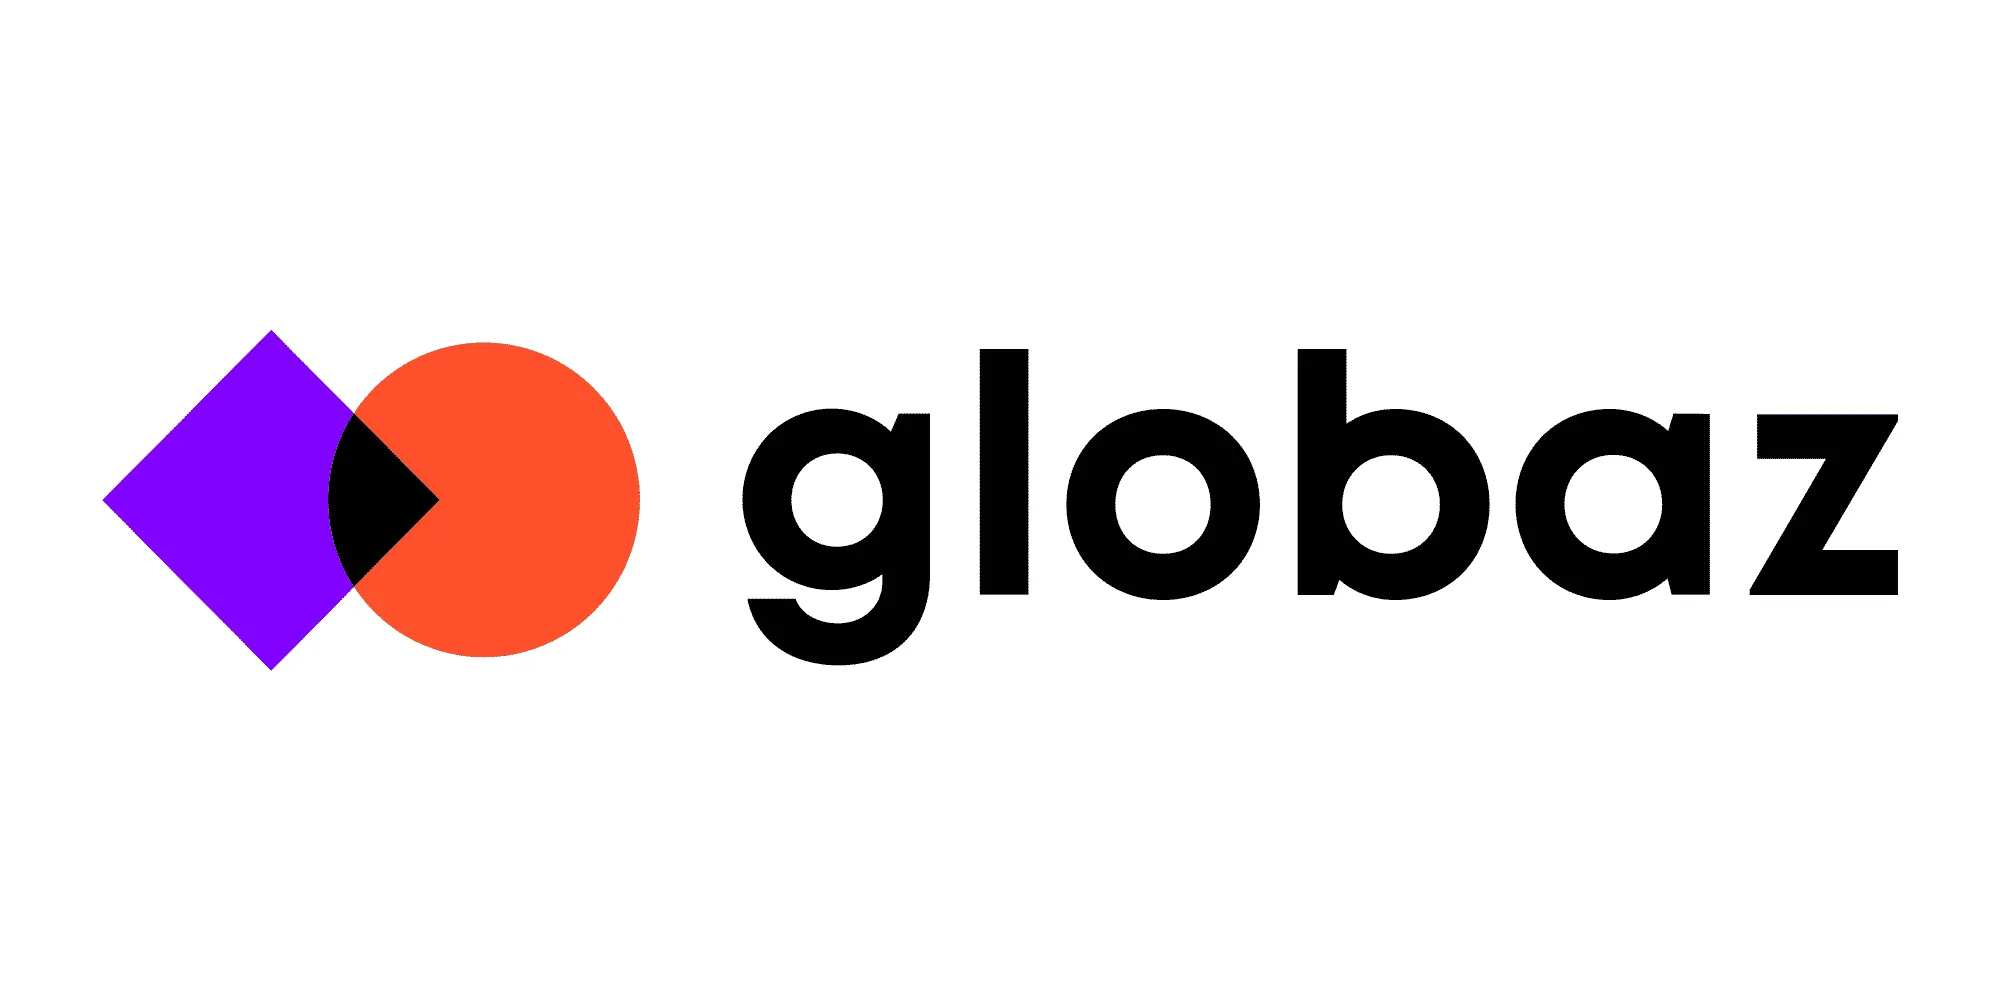 globaz logo